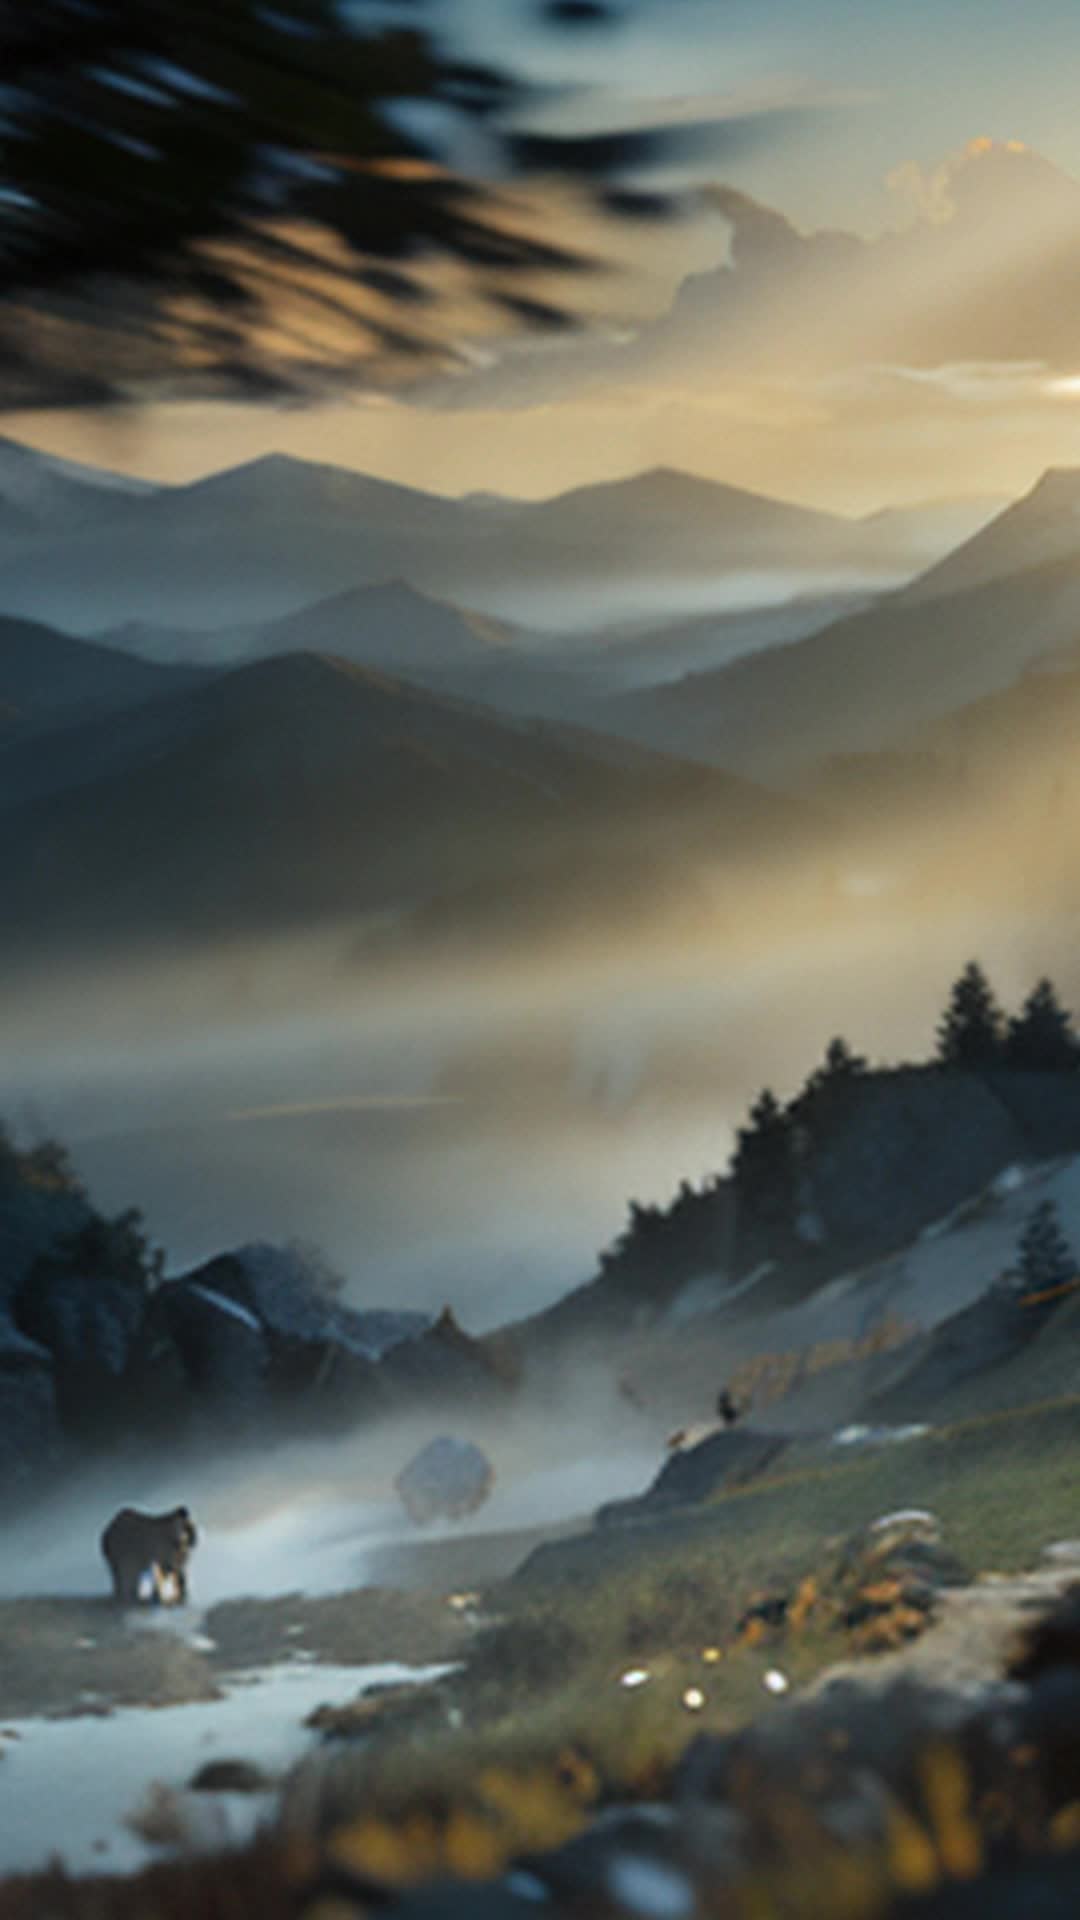 Misty hills looming in background, legendary Okami wolf, fur dazzlingly white, grey dawn lighting, darting through dense forest, swift, sure strides